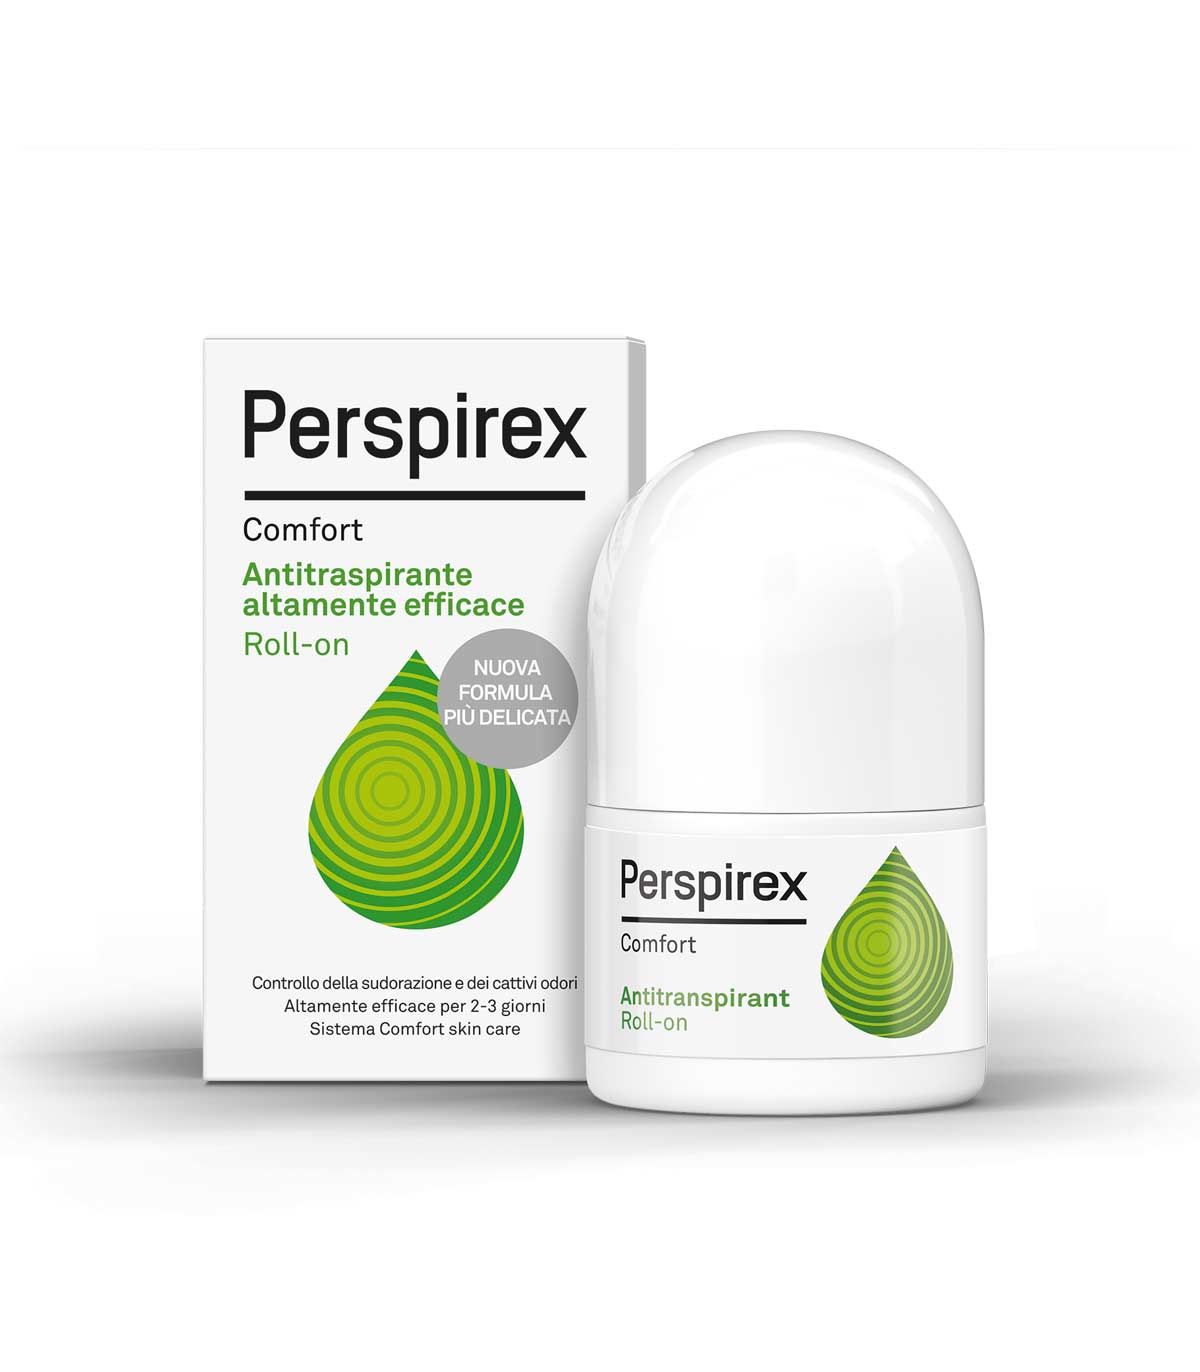 Perspirex Comfort Roll-on Deodorante 20ml